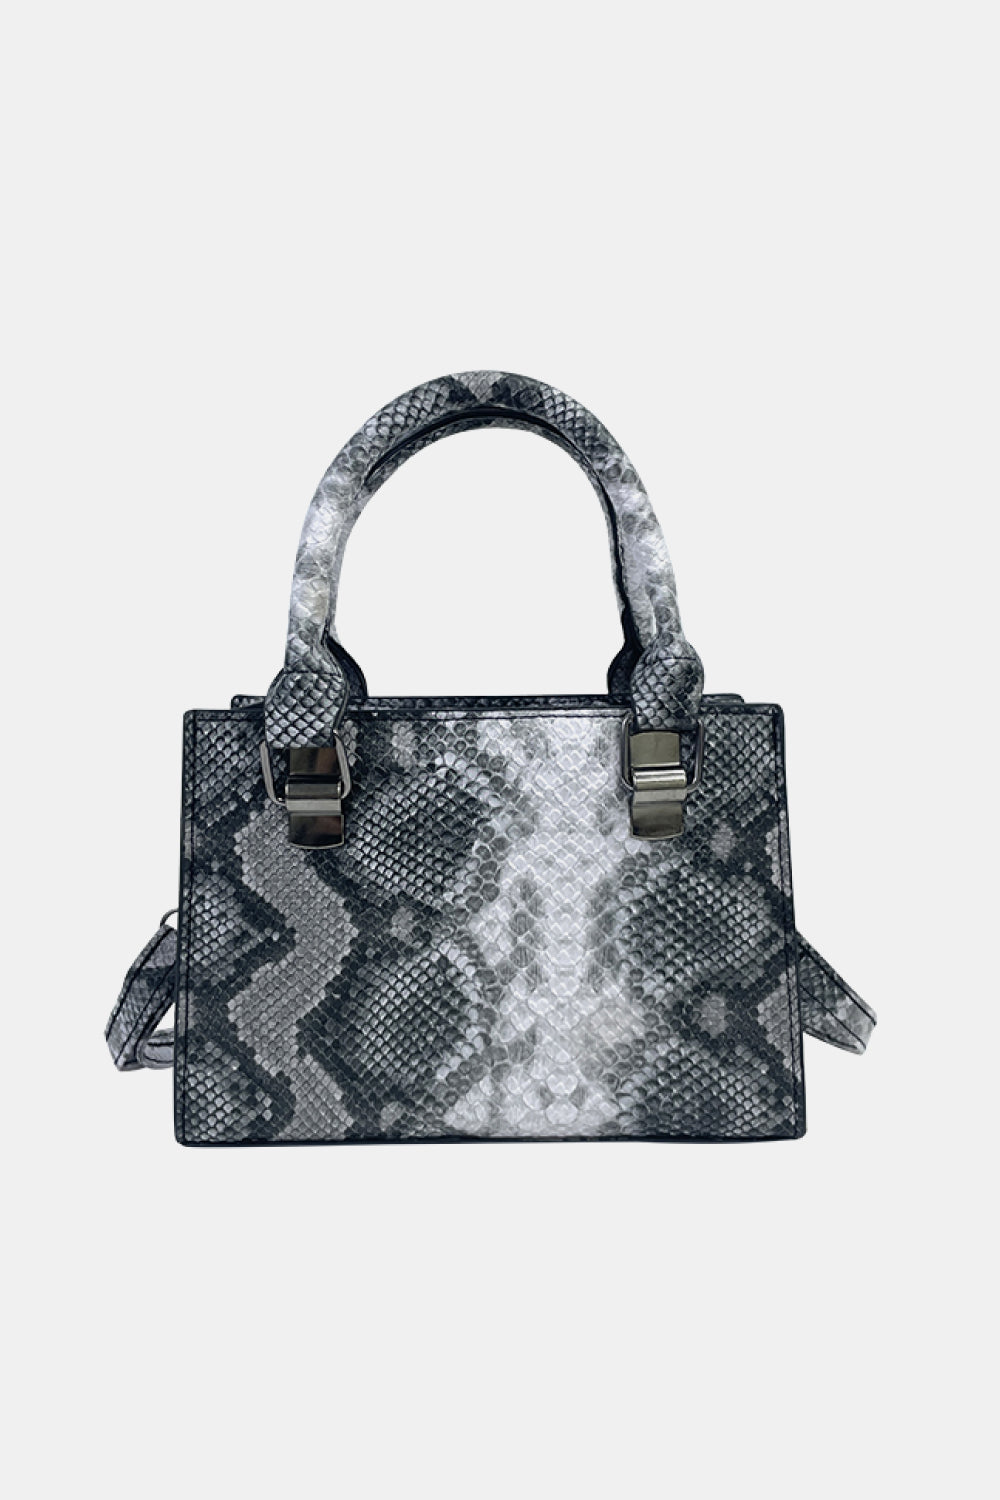 Snakeskin Print PU Leather Handbag - Handbag - FITGGINS